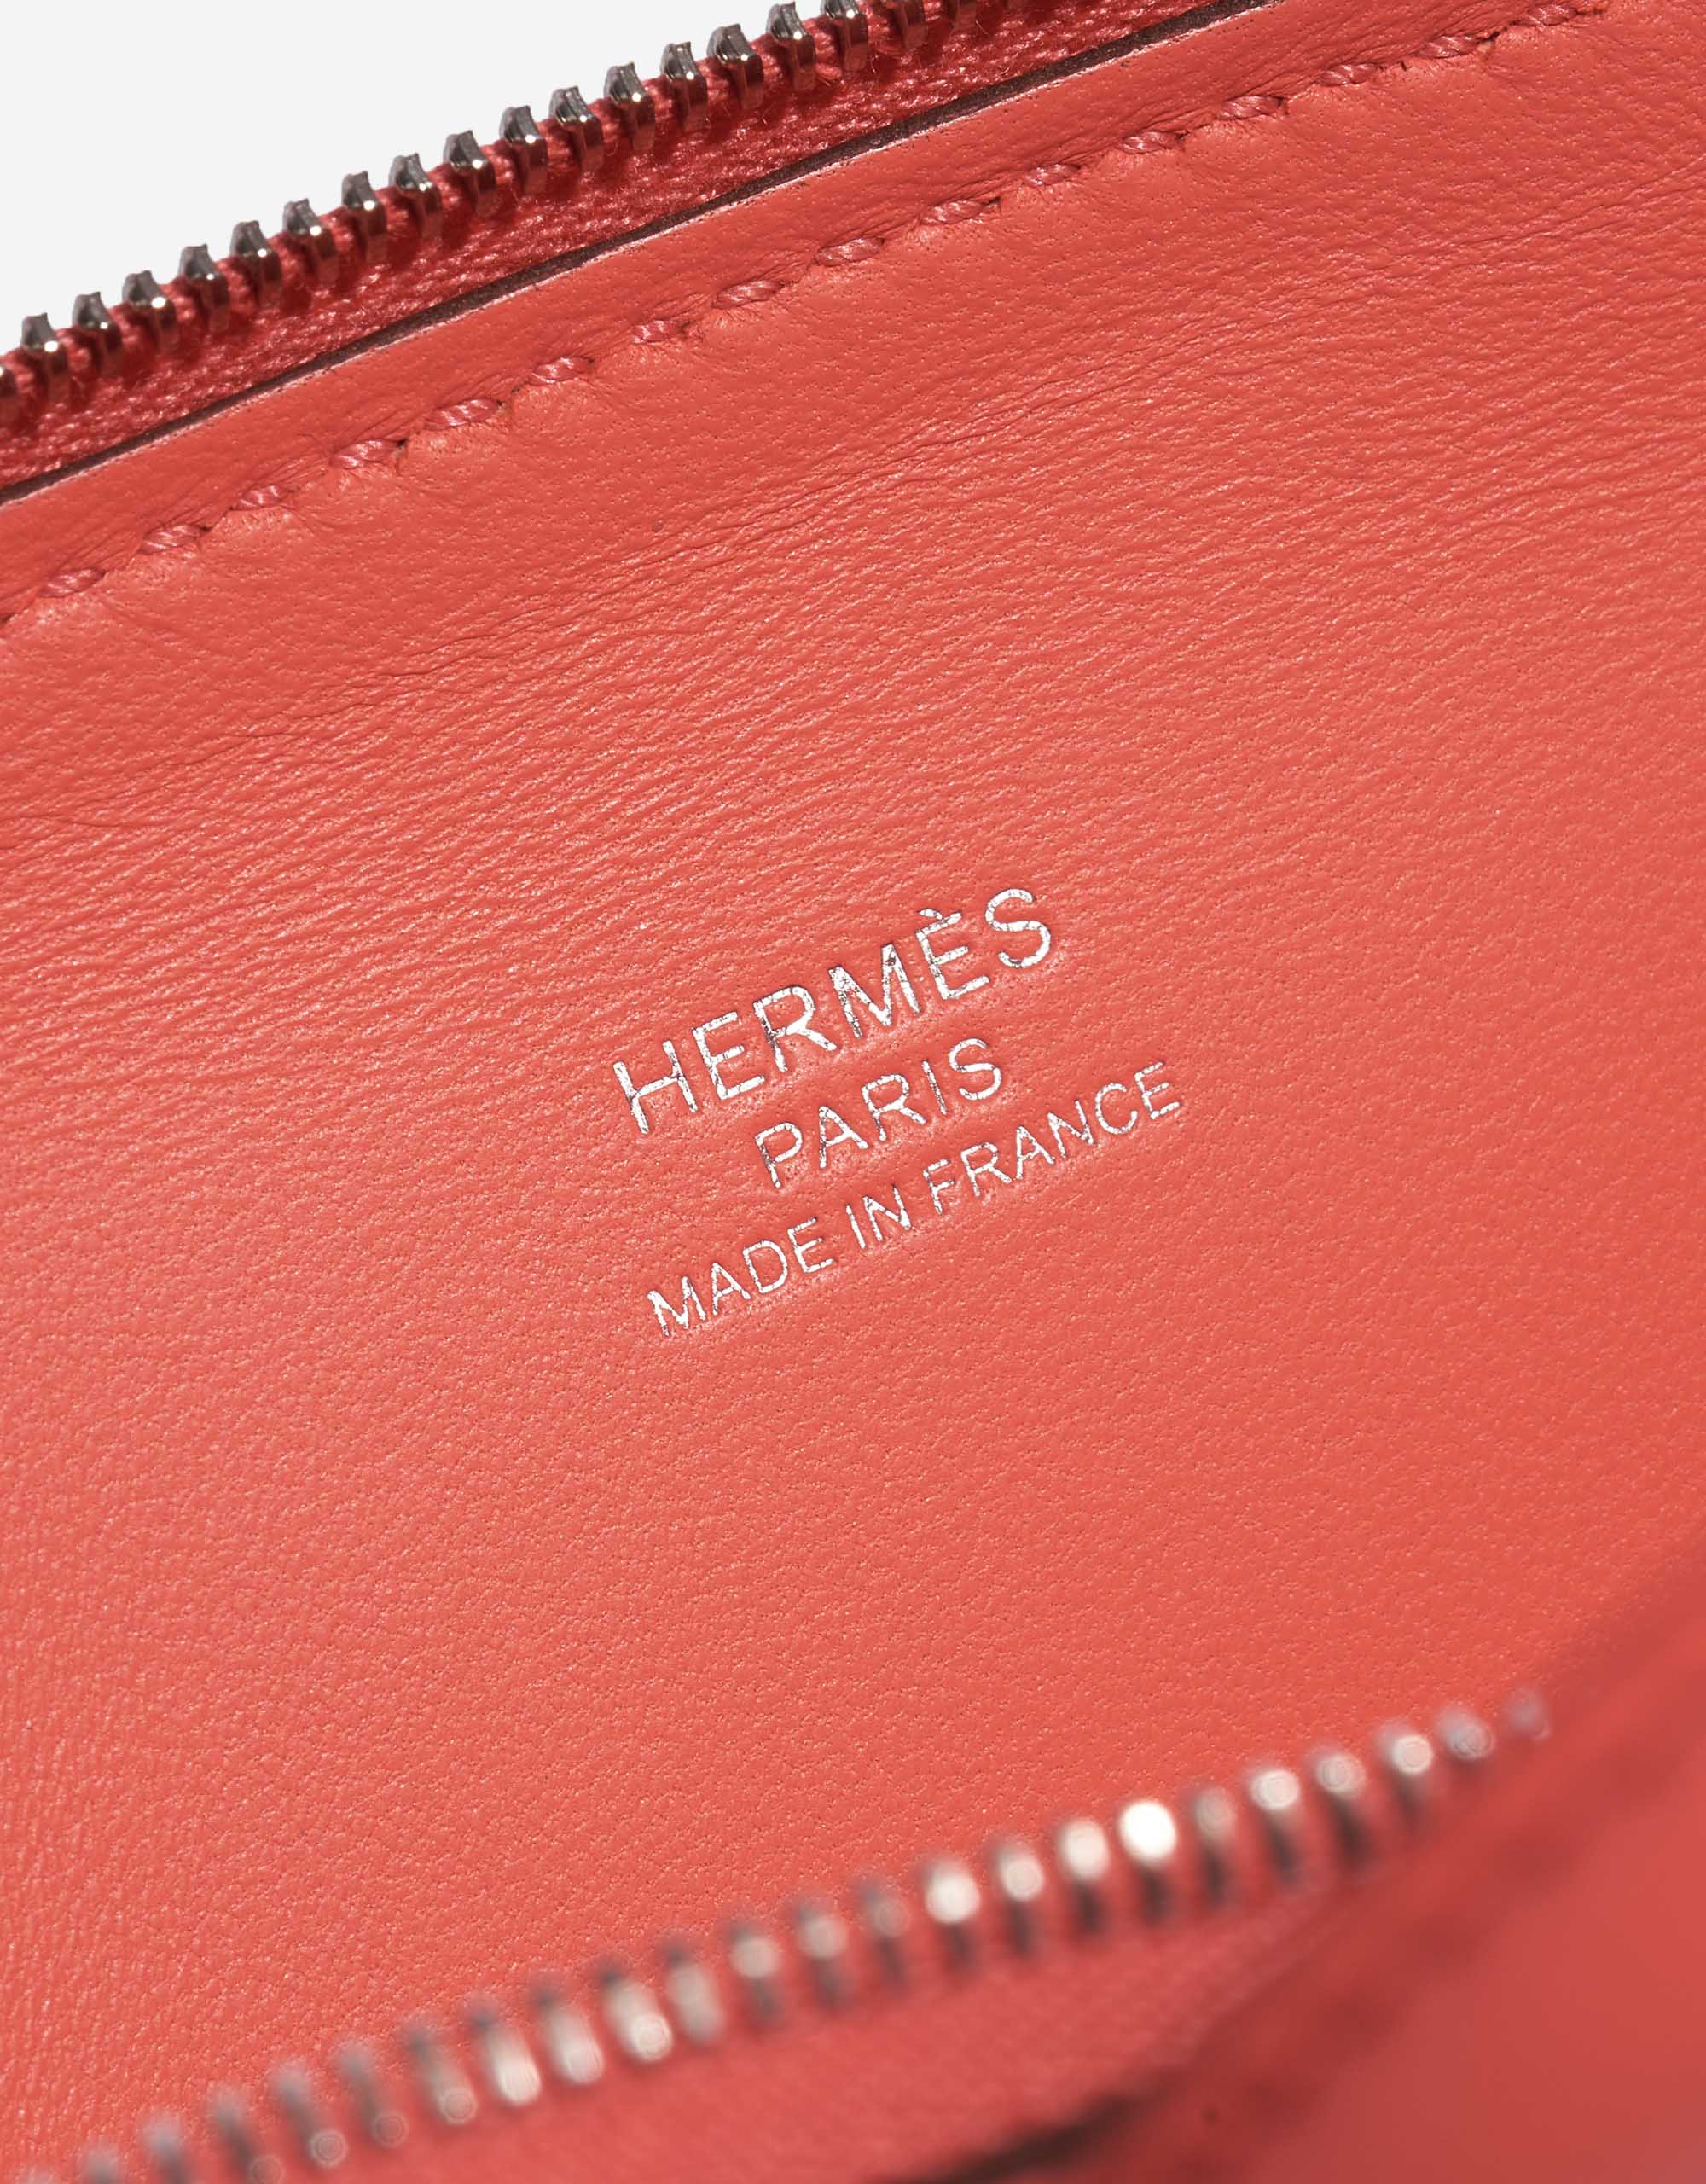 HERMÈS Mini Bags & HERMÈS Bolide Handbags for Women